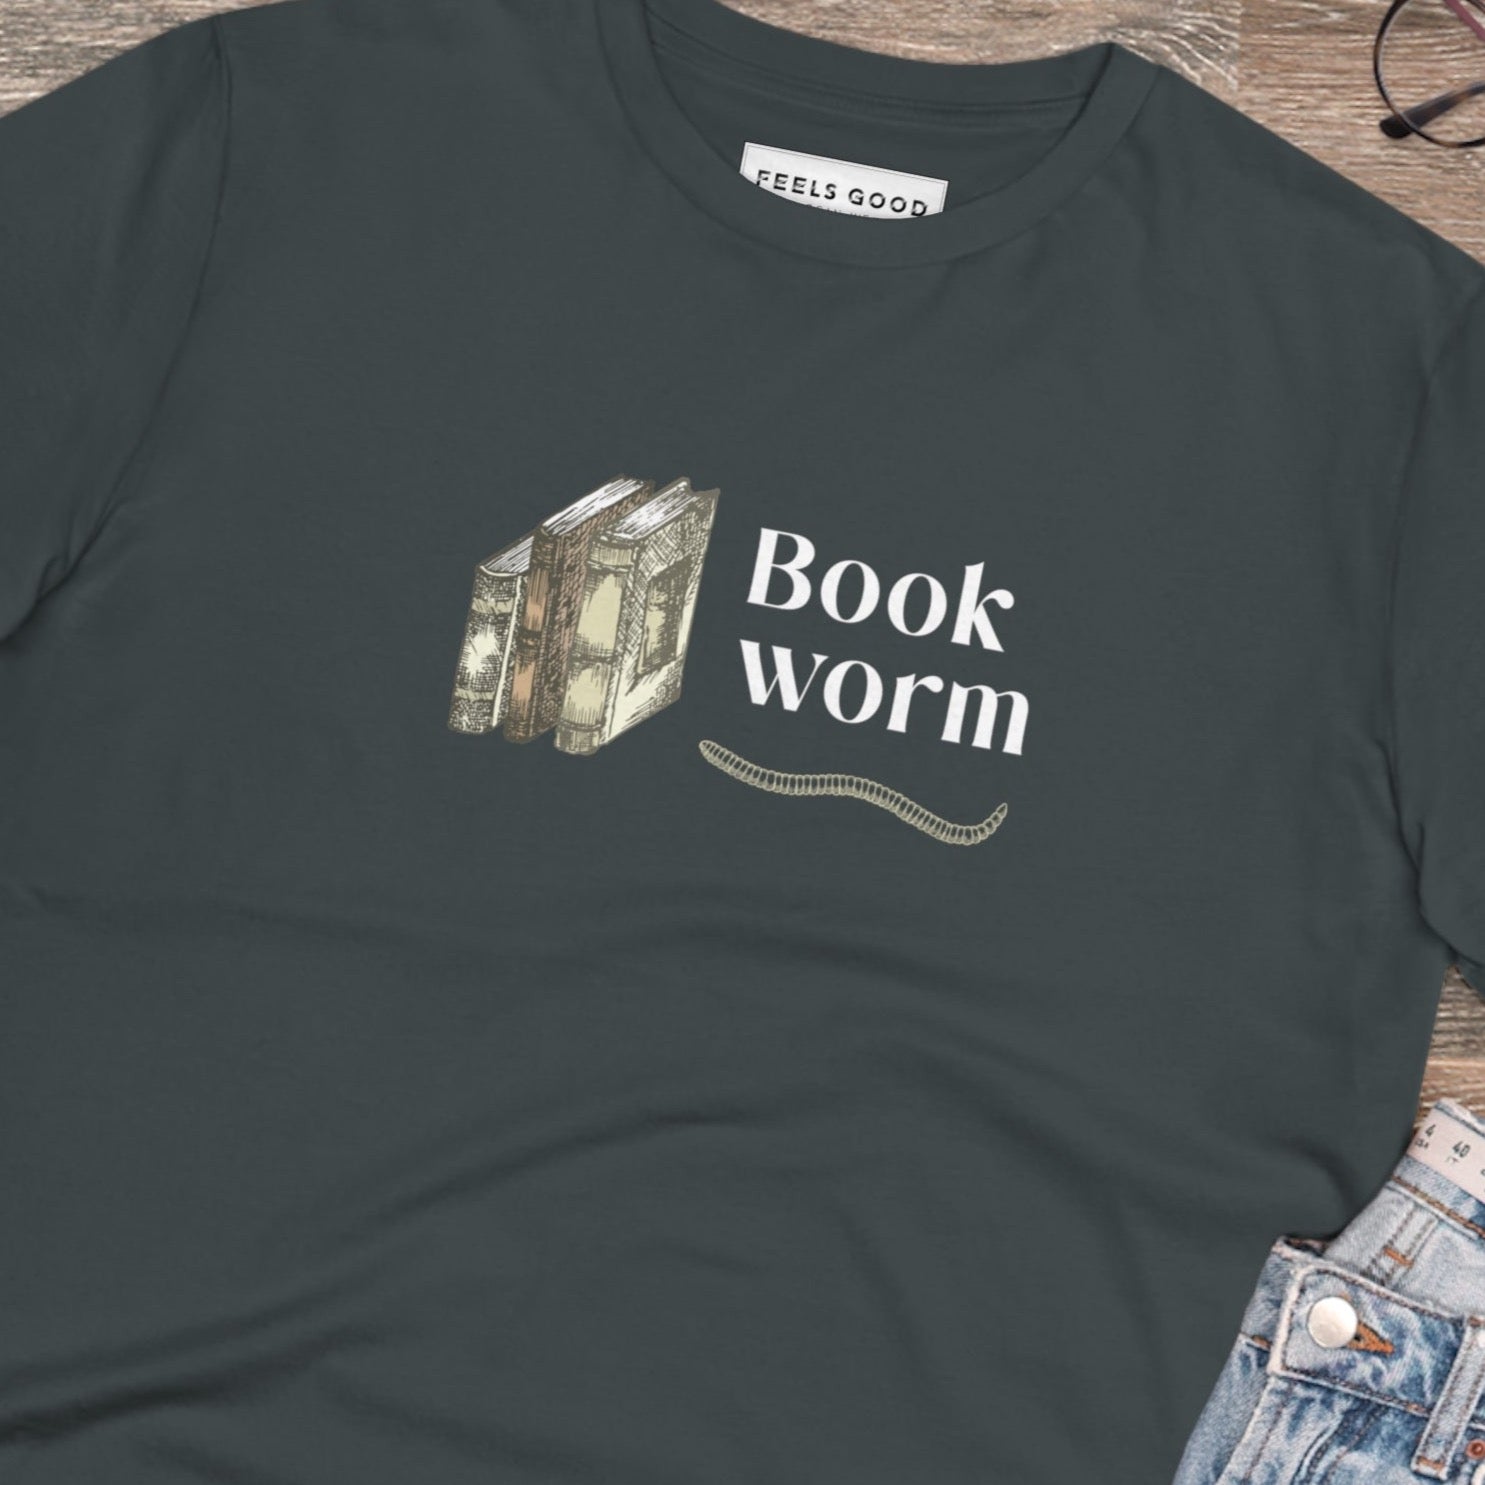 Books 'Bookworm' Organic Cotton T-shirt - Book worm